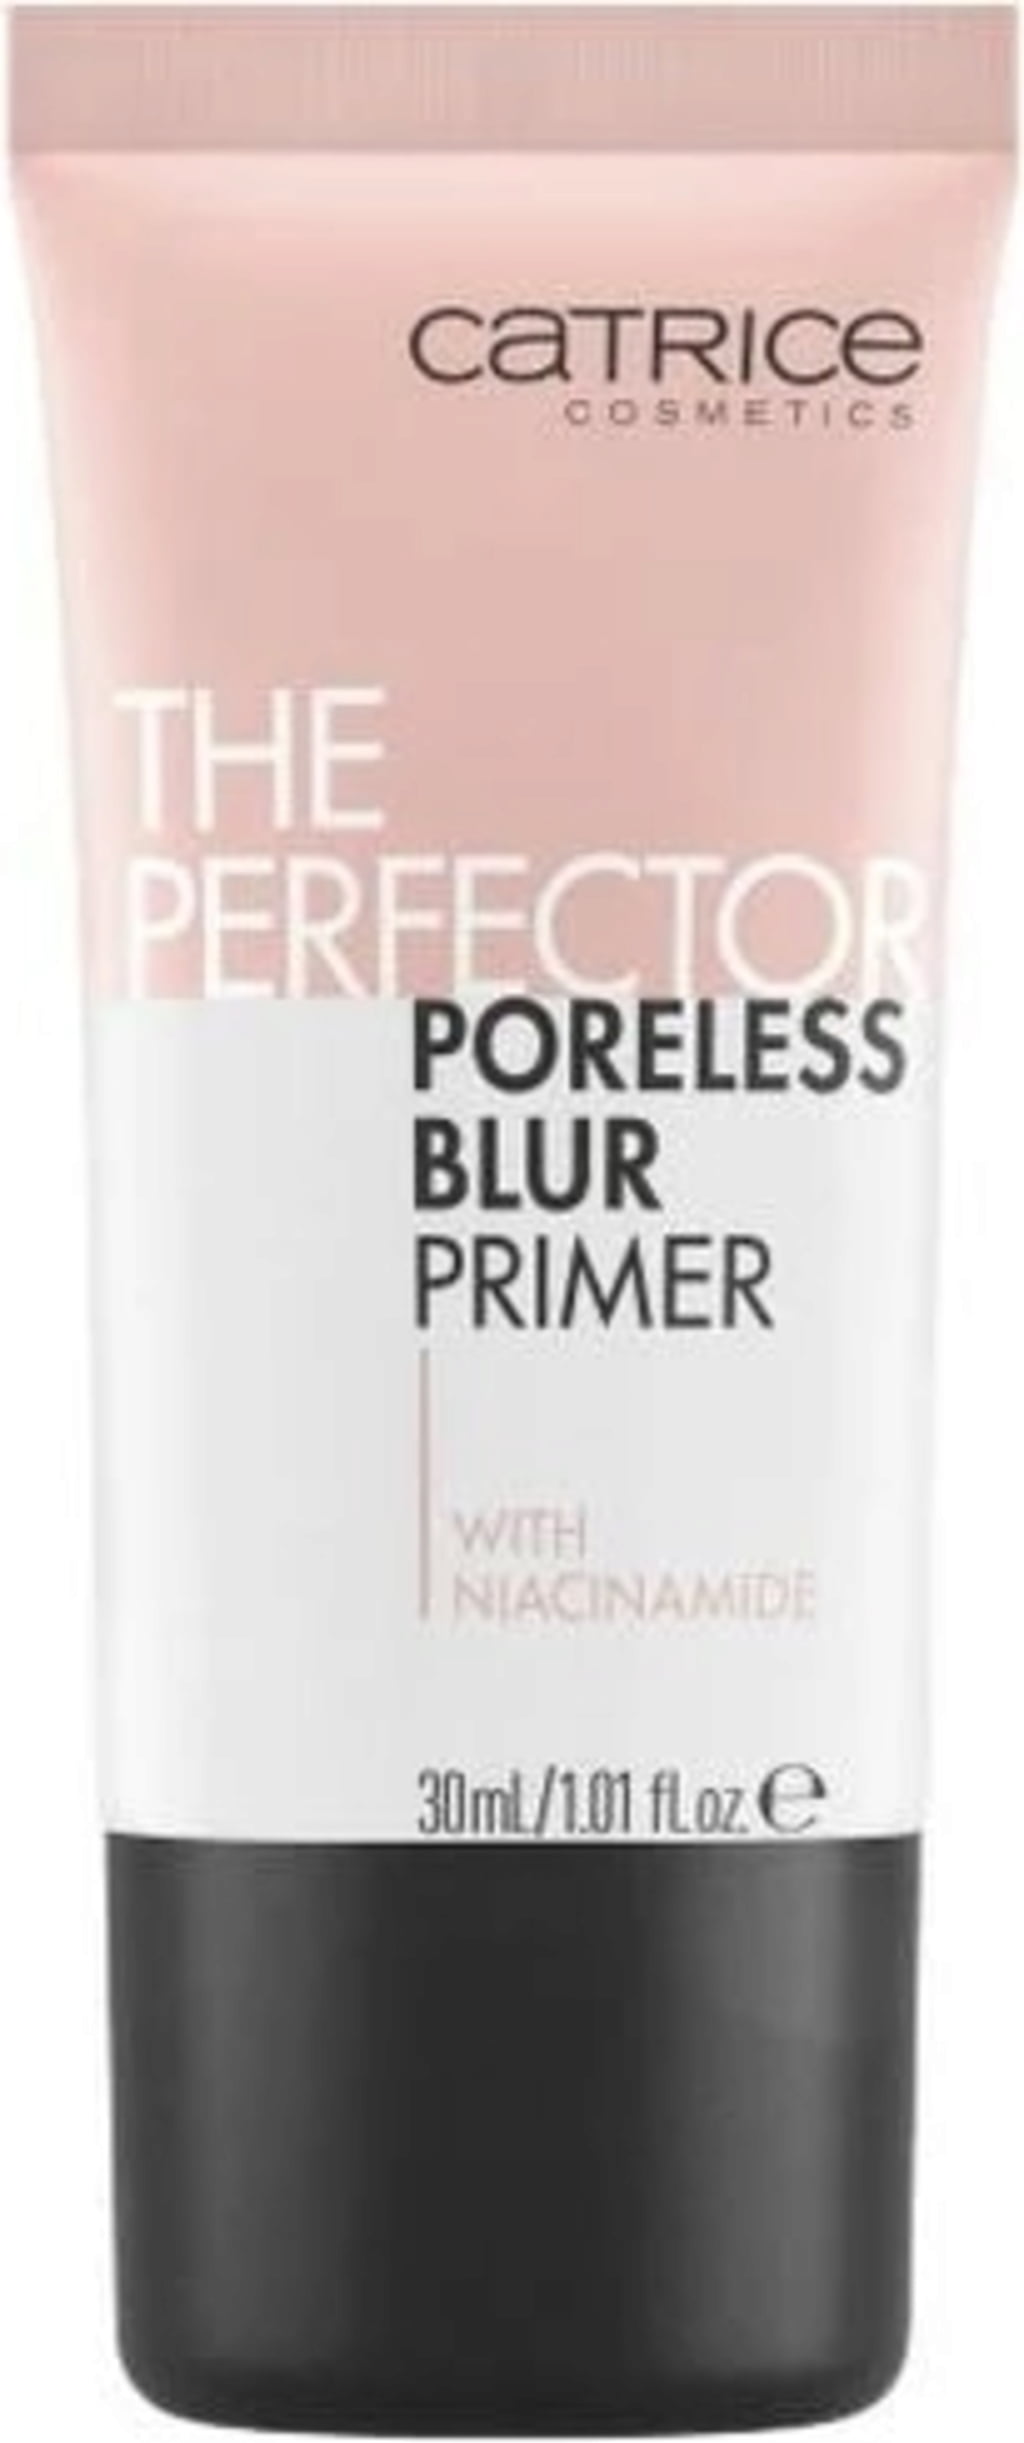 Catrice The Perfector Poreless Blur Primer, 30 ml - oh feliz